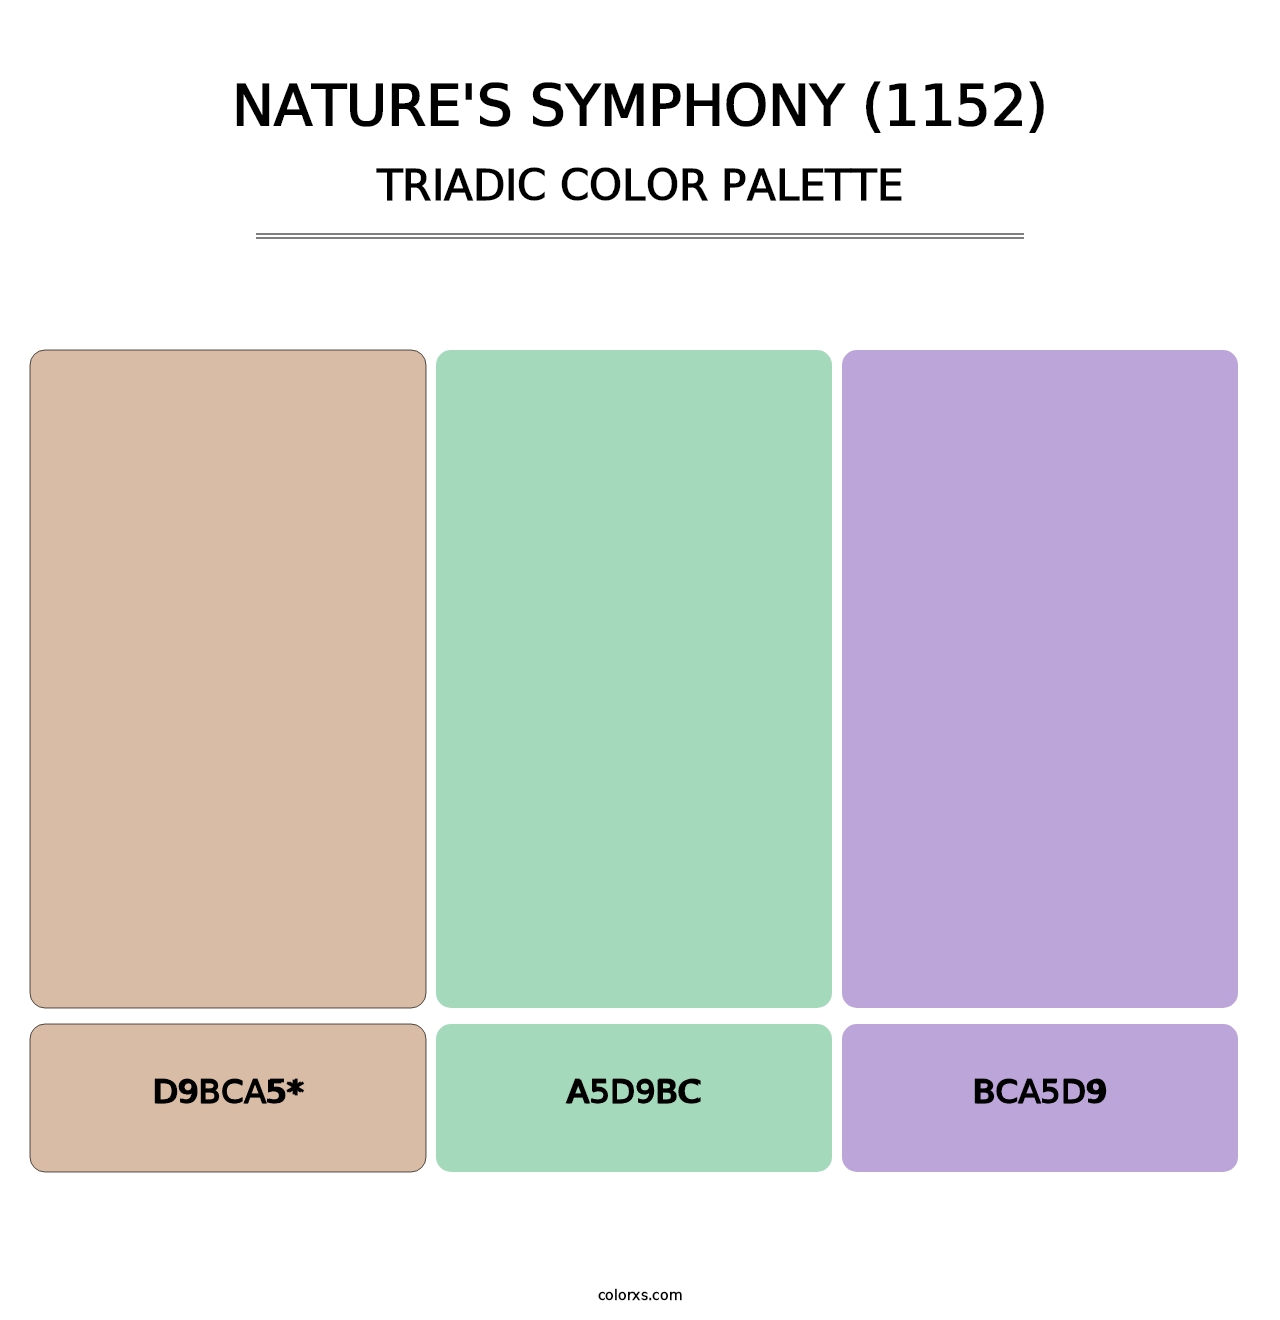 Nature's Symphony (1152) - Triadic Color Palette